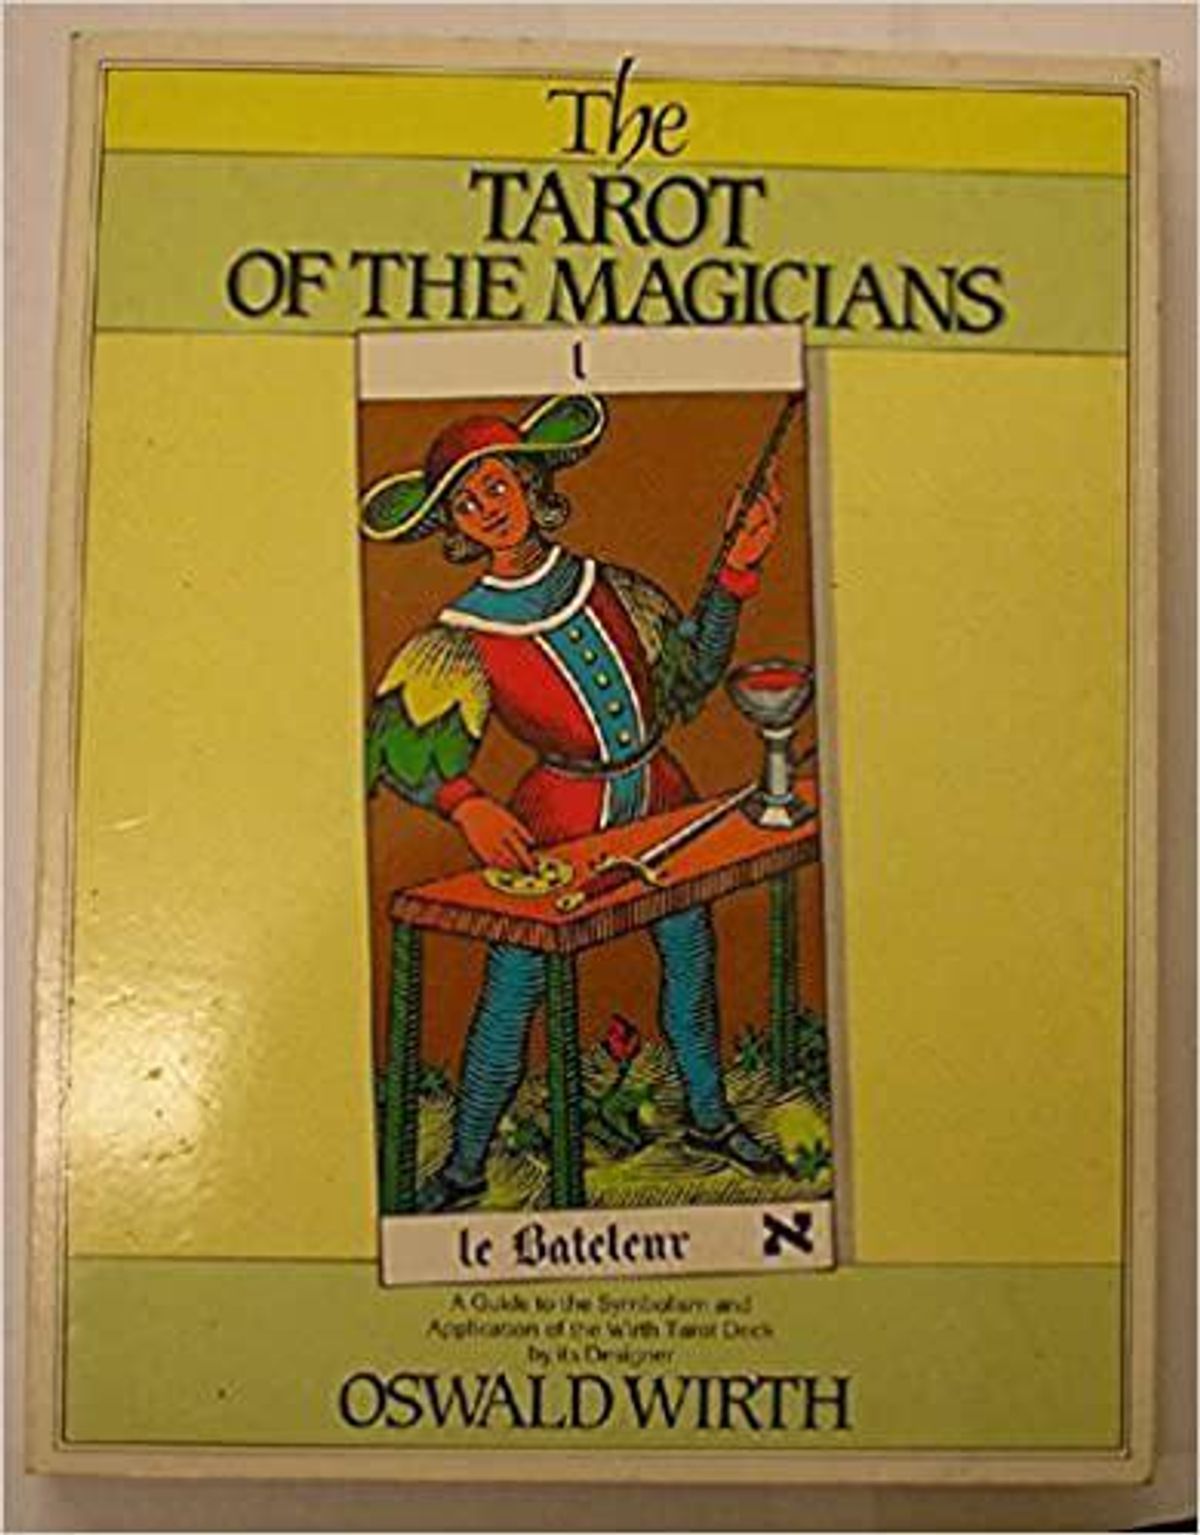 The Tarot of the Magicians